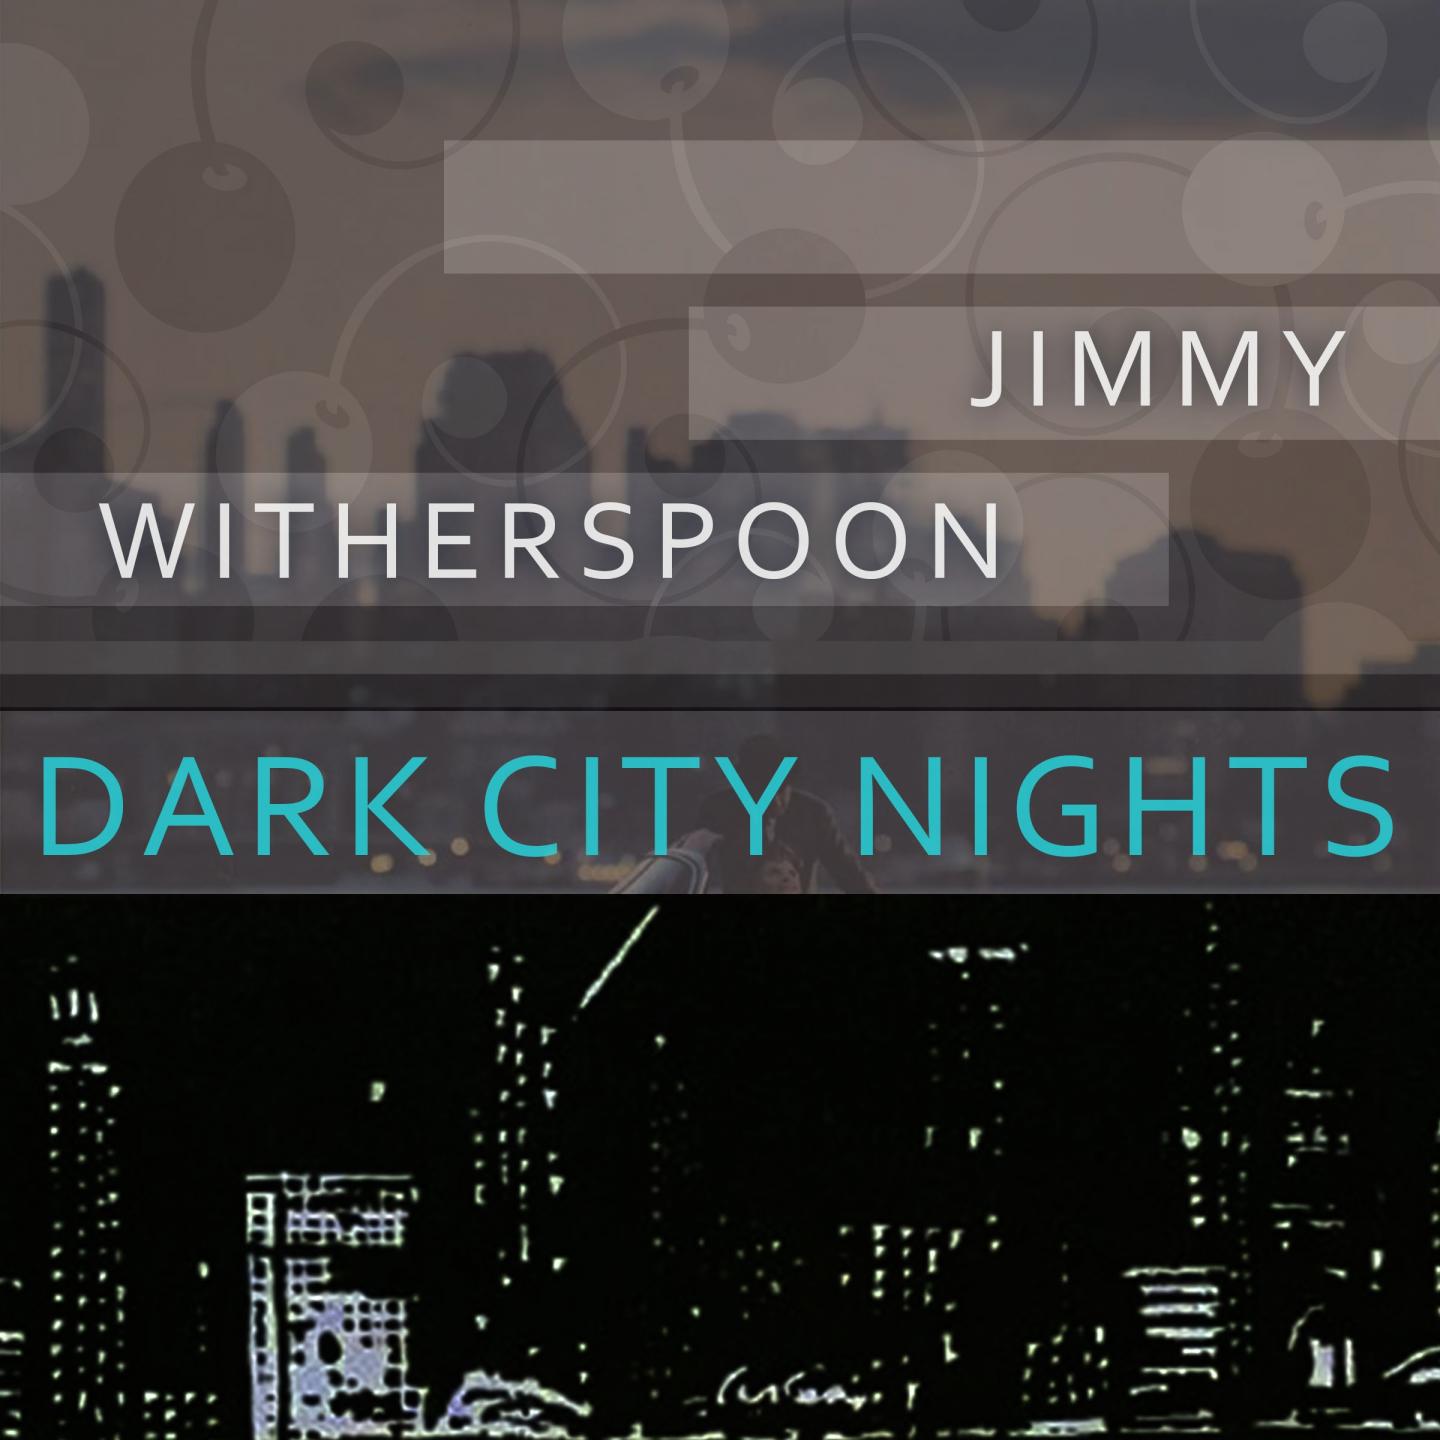 Dark City Nights